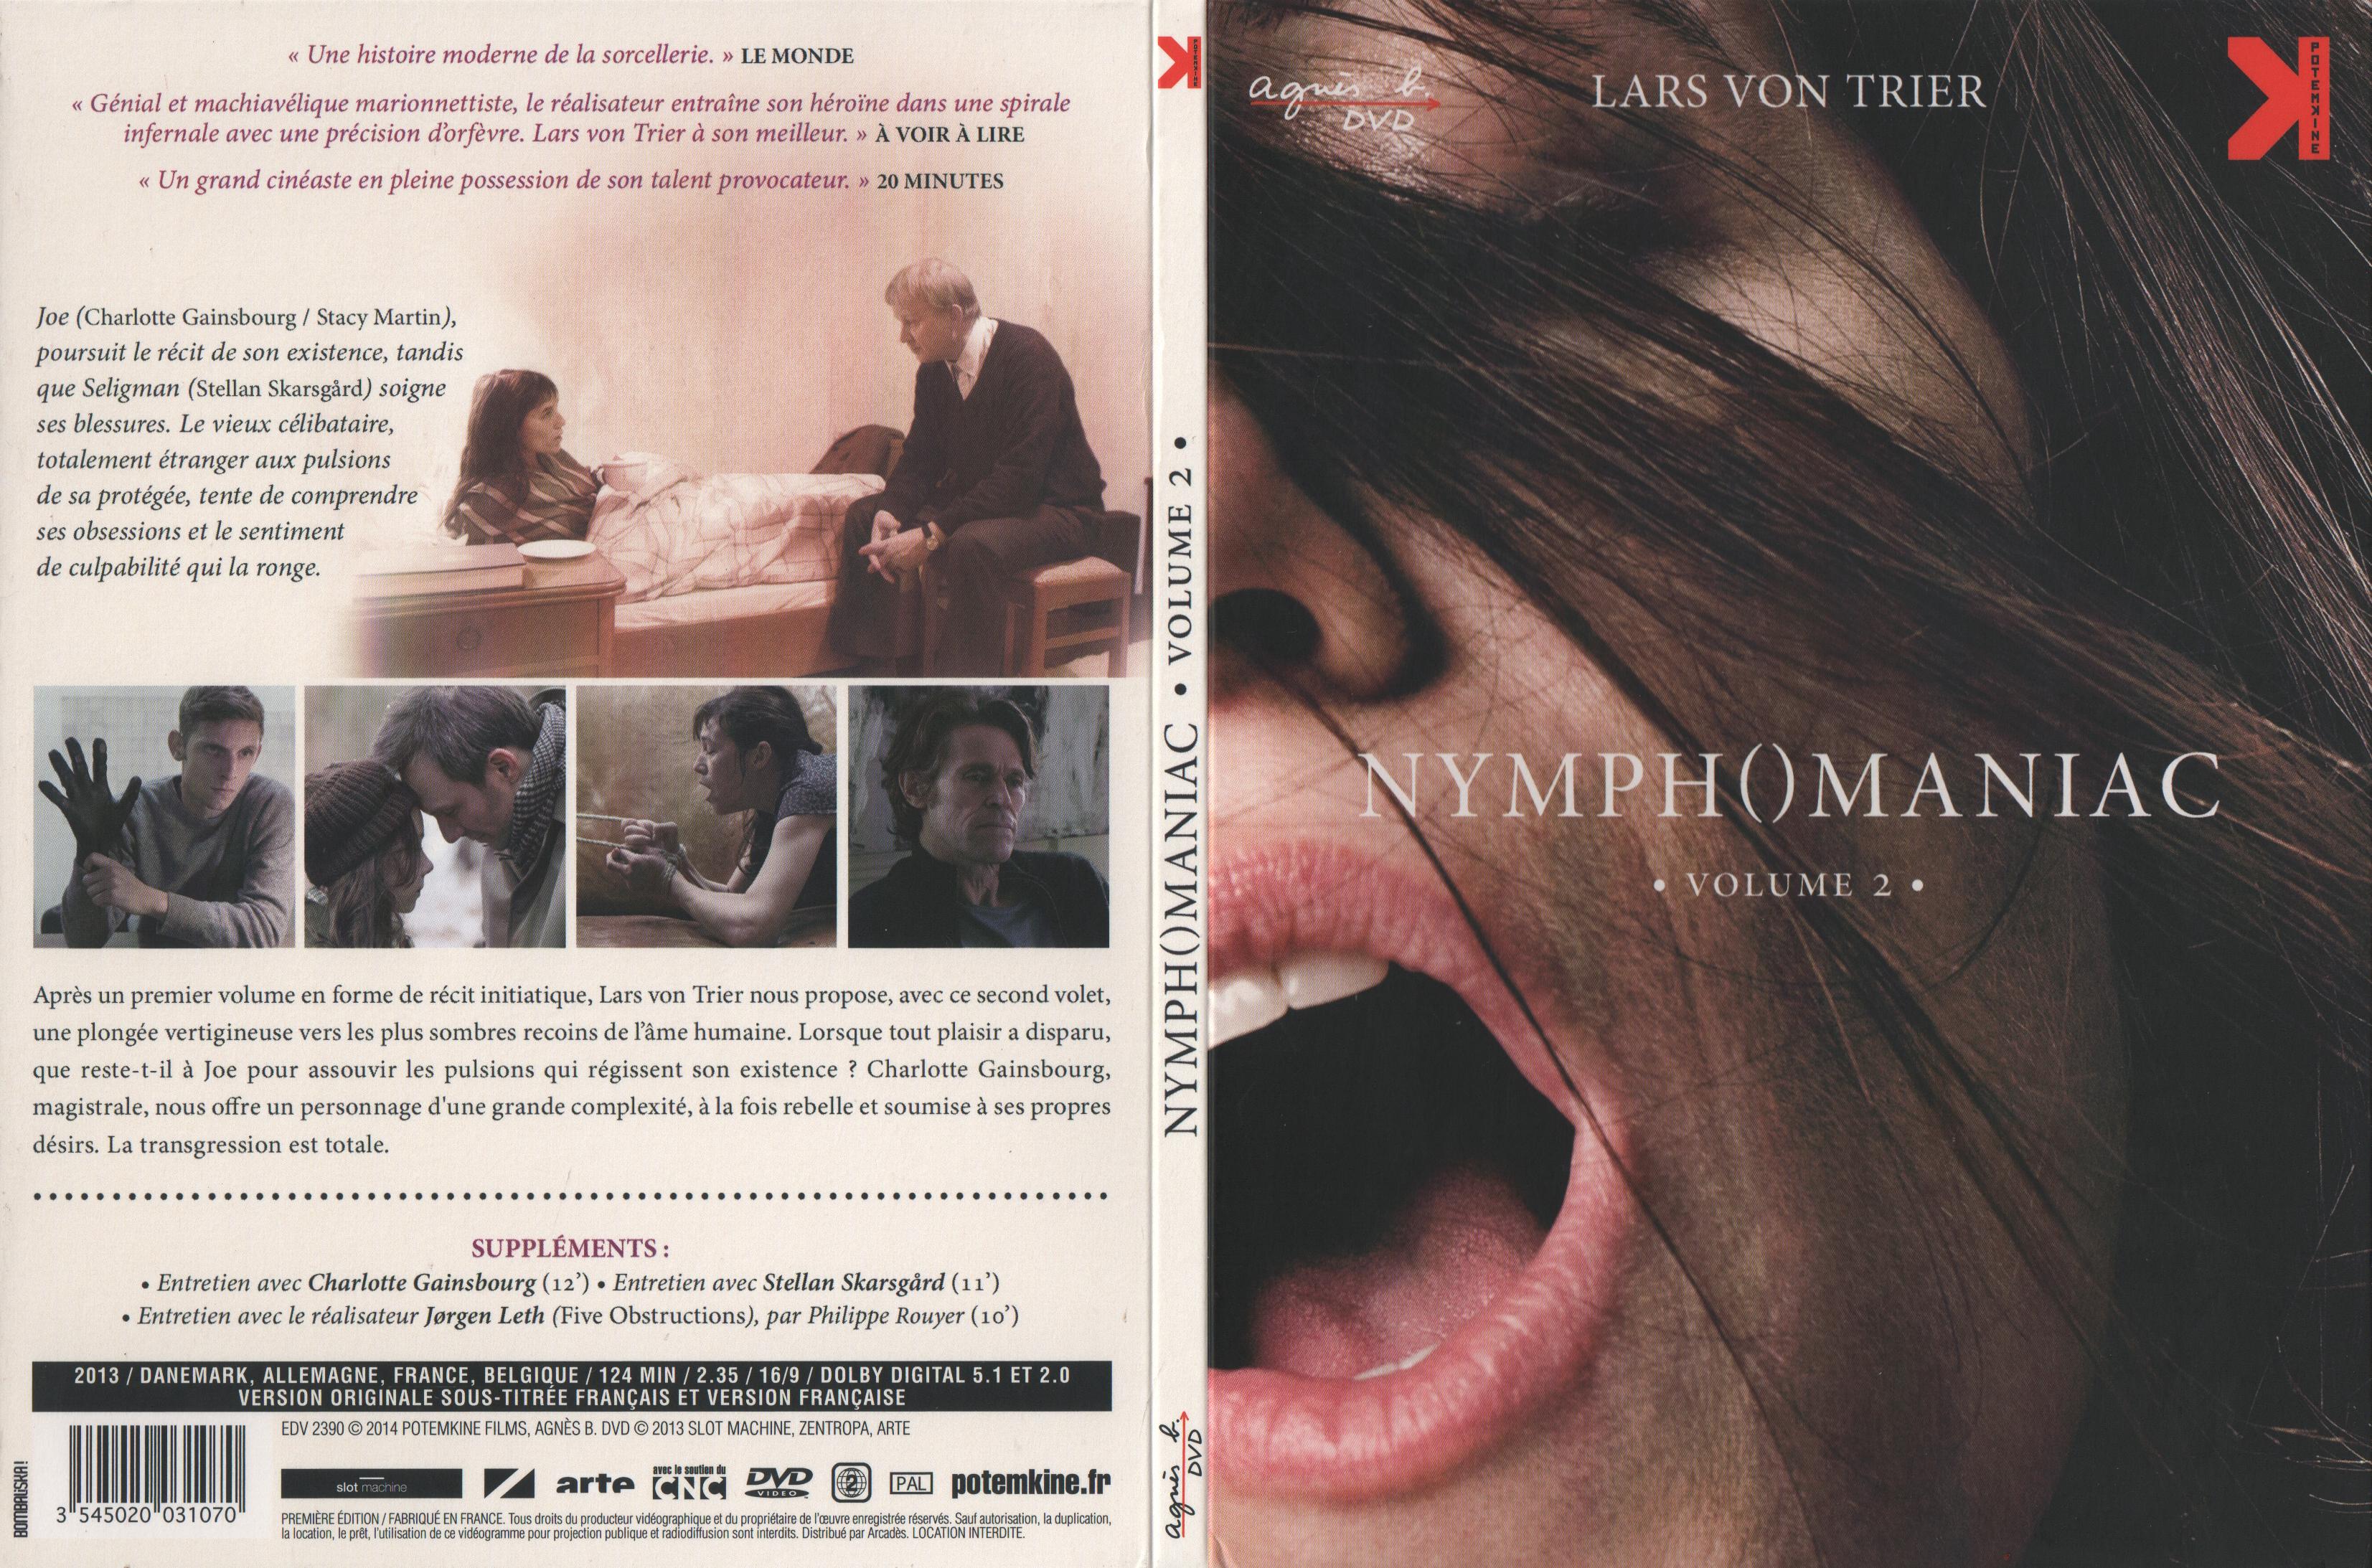 Jaquette DVD Nymphomaniac vol 2